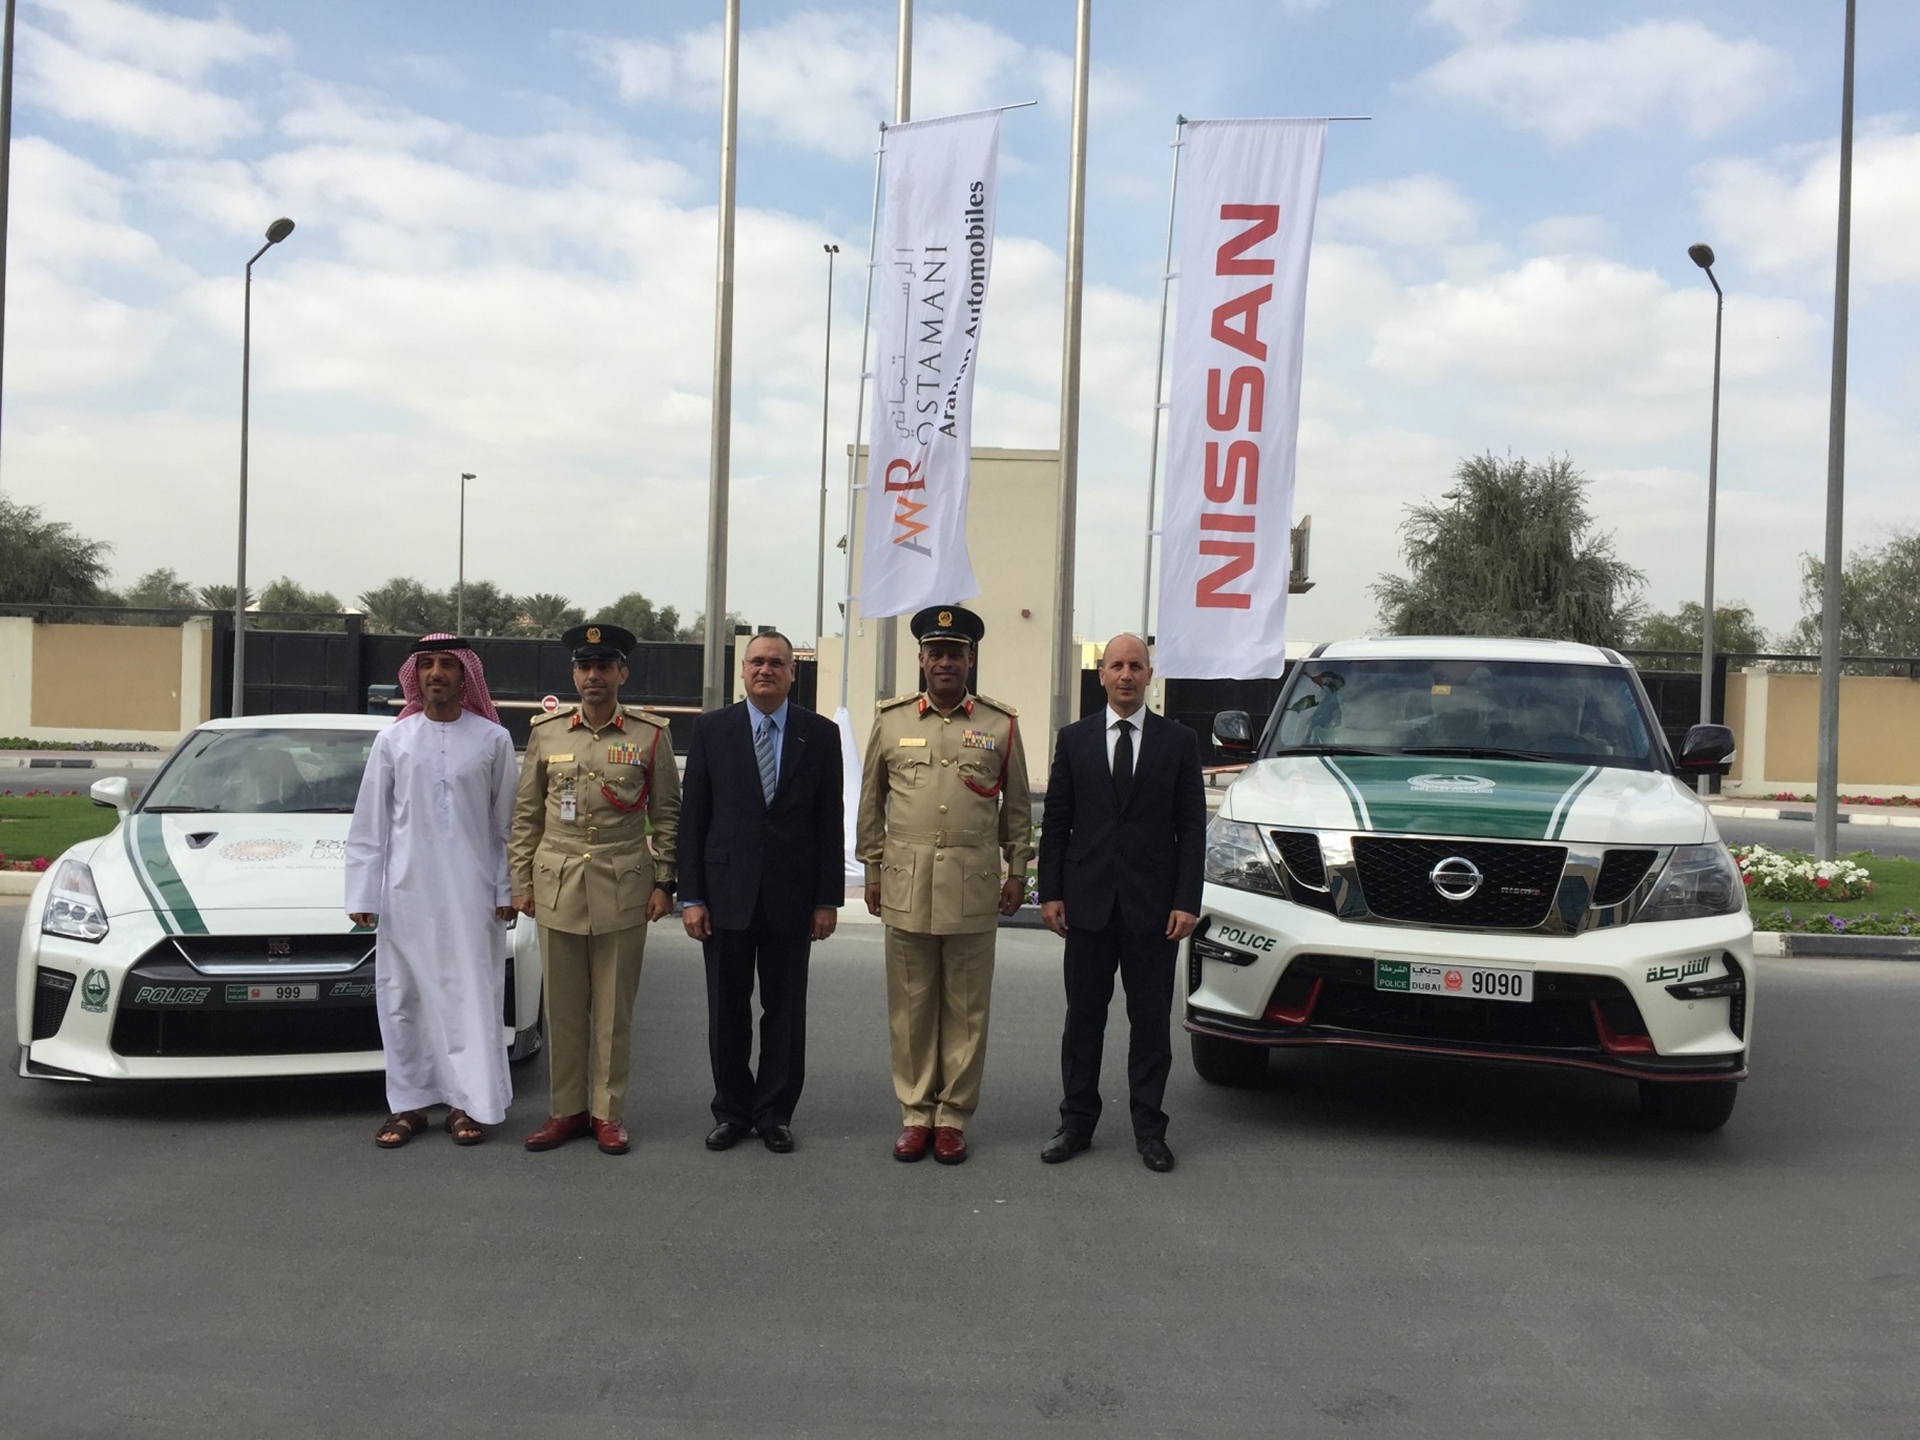 Dubai Police adds NISMO power to its luxury fleet of cutting edge police vehicles